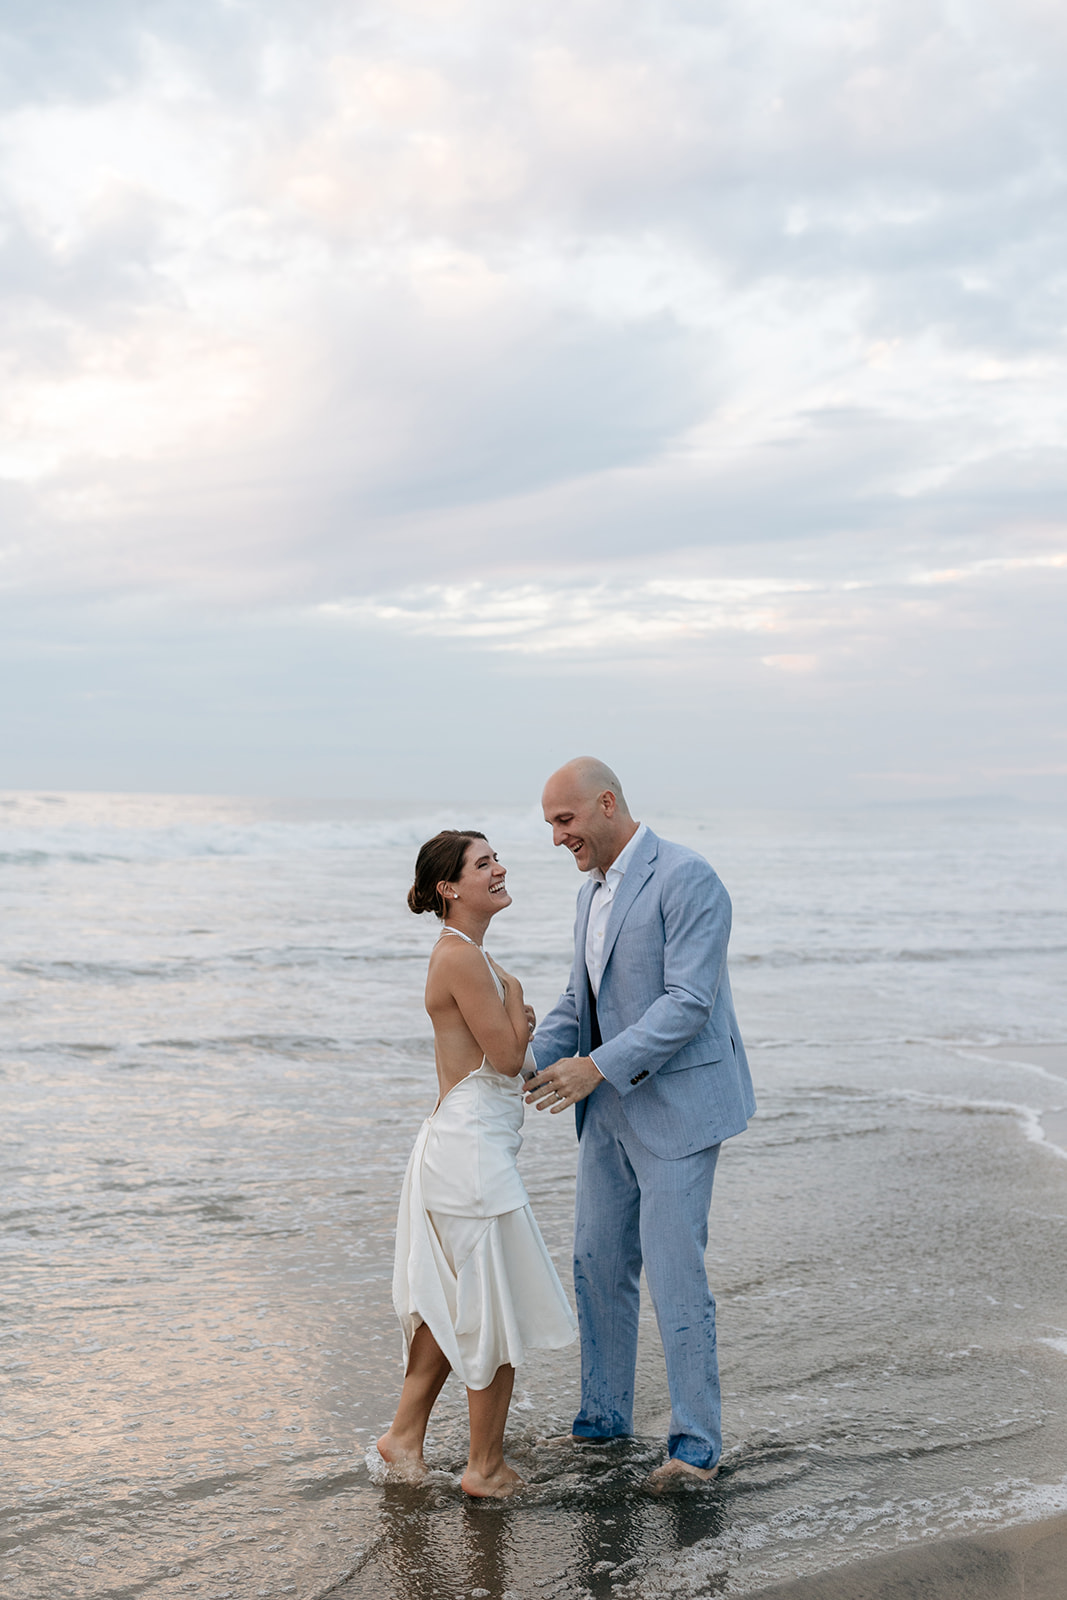 backyard beach wedding elopement encinitas southern california socal cloudy sunset california beach wedding ideas